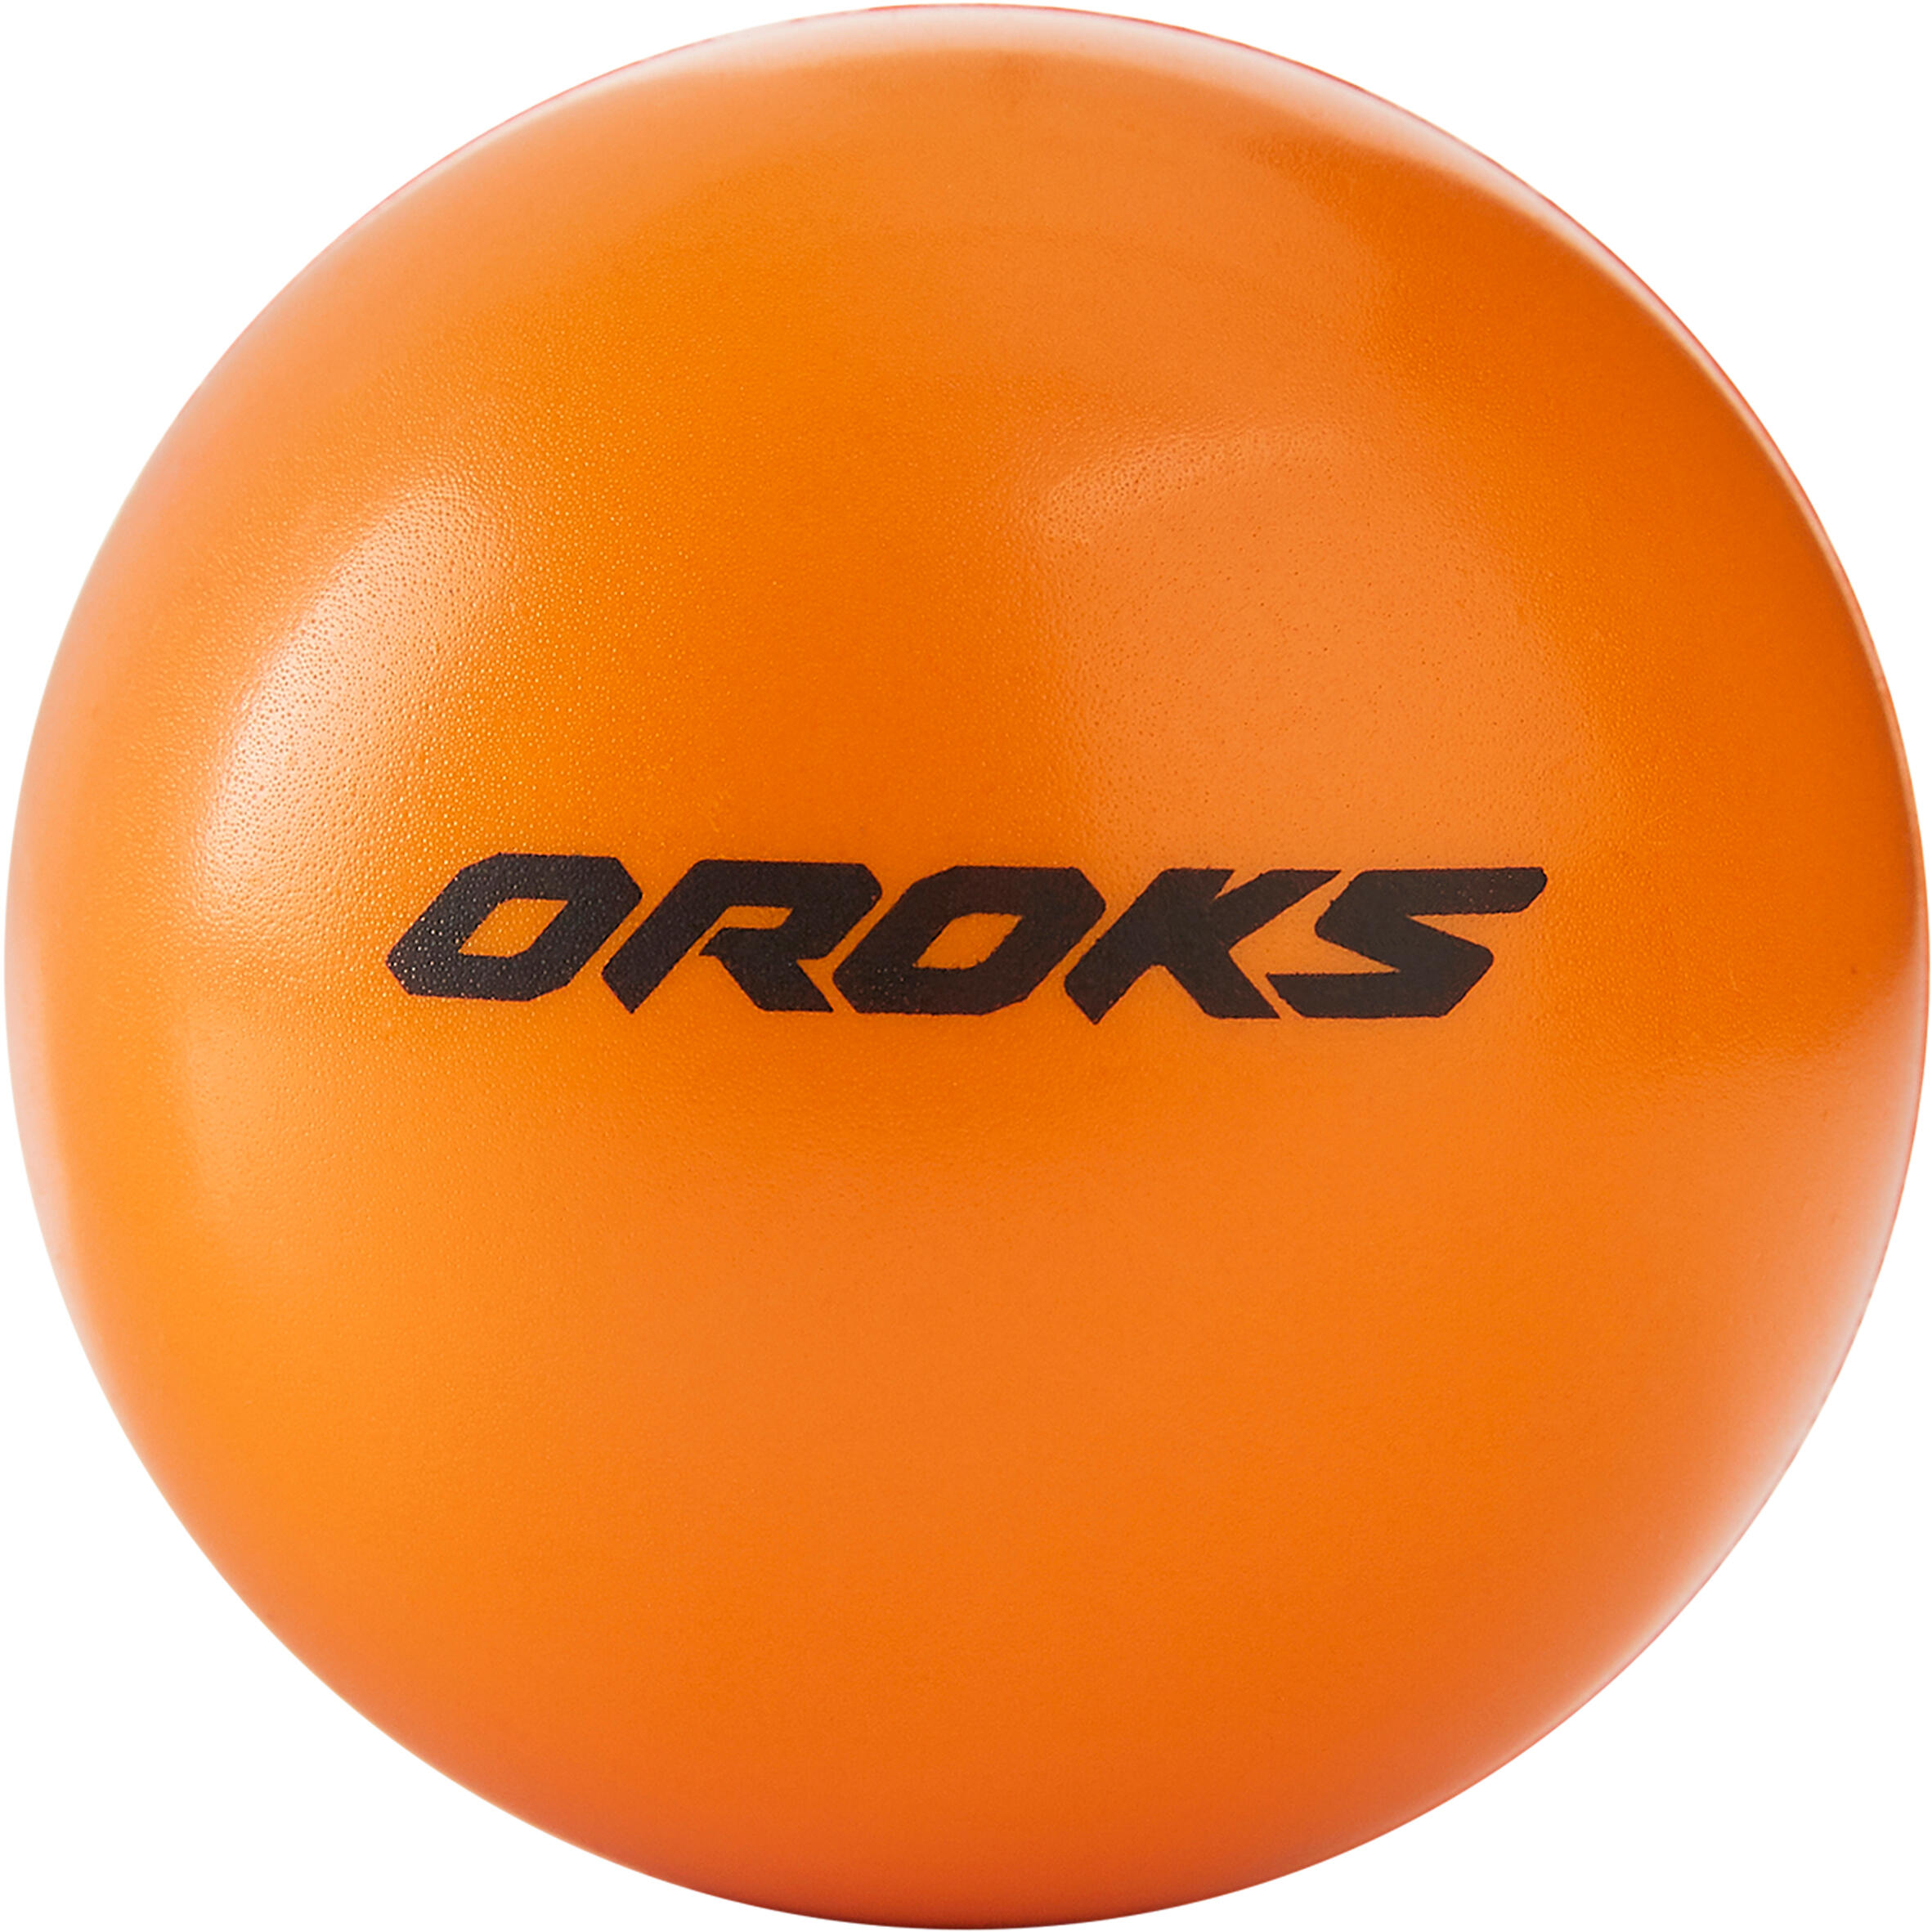 Foam Hockey Ball - OROKS